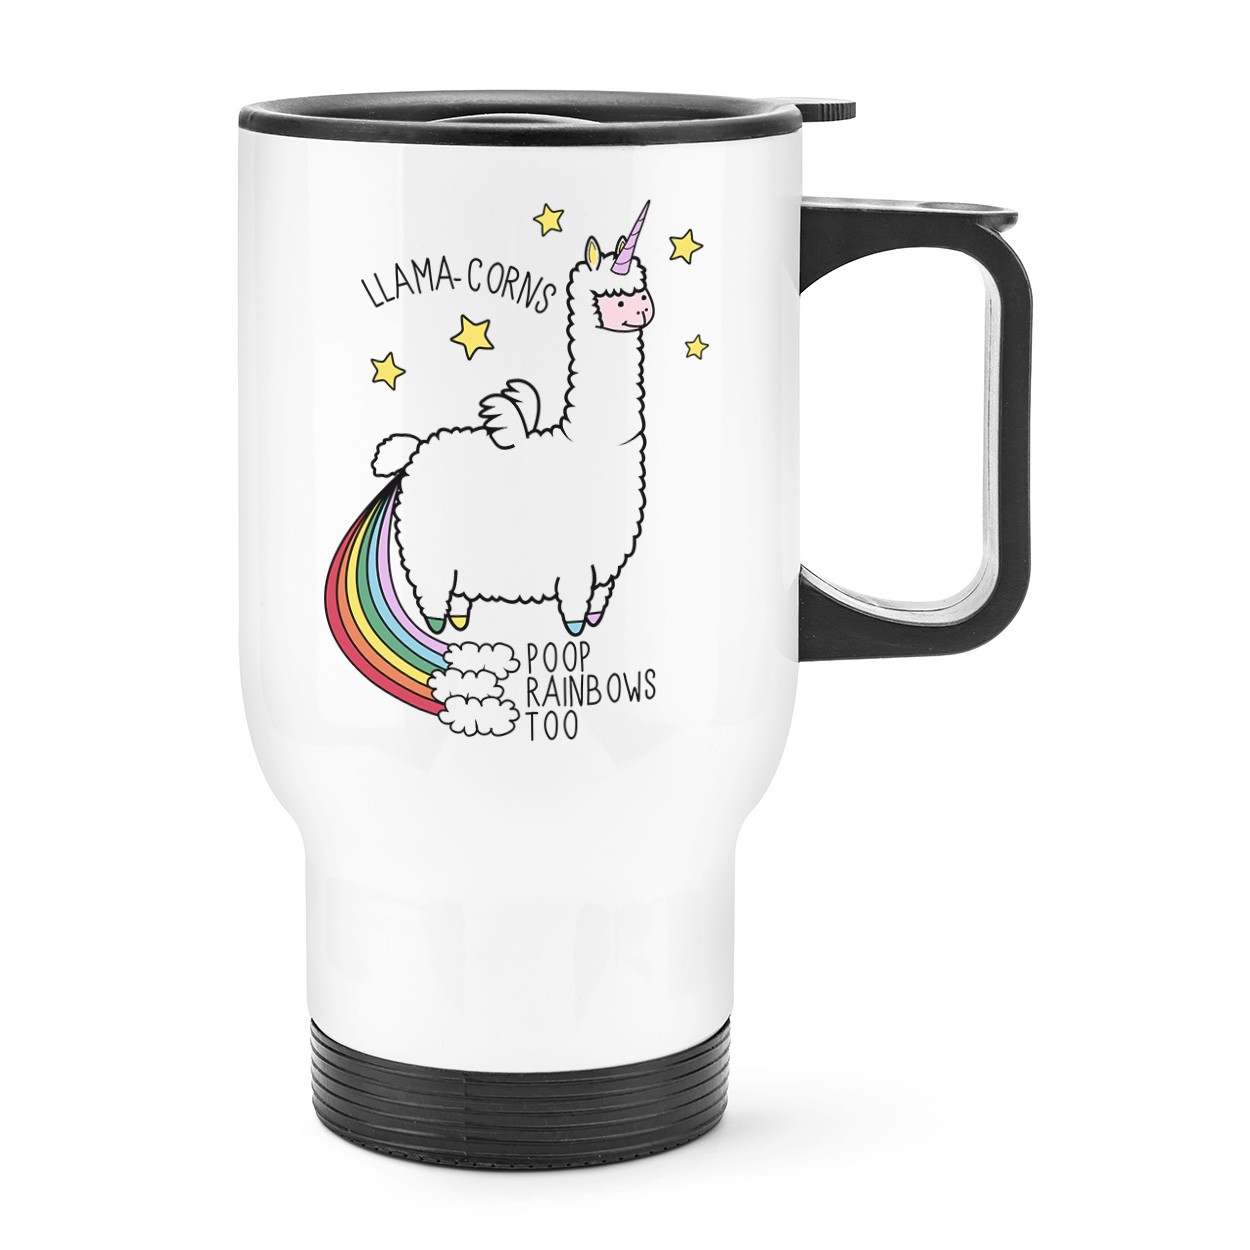 Llama-corns Poop Rainbows Too Travel Mug Cup With Handle